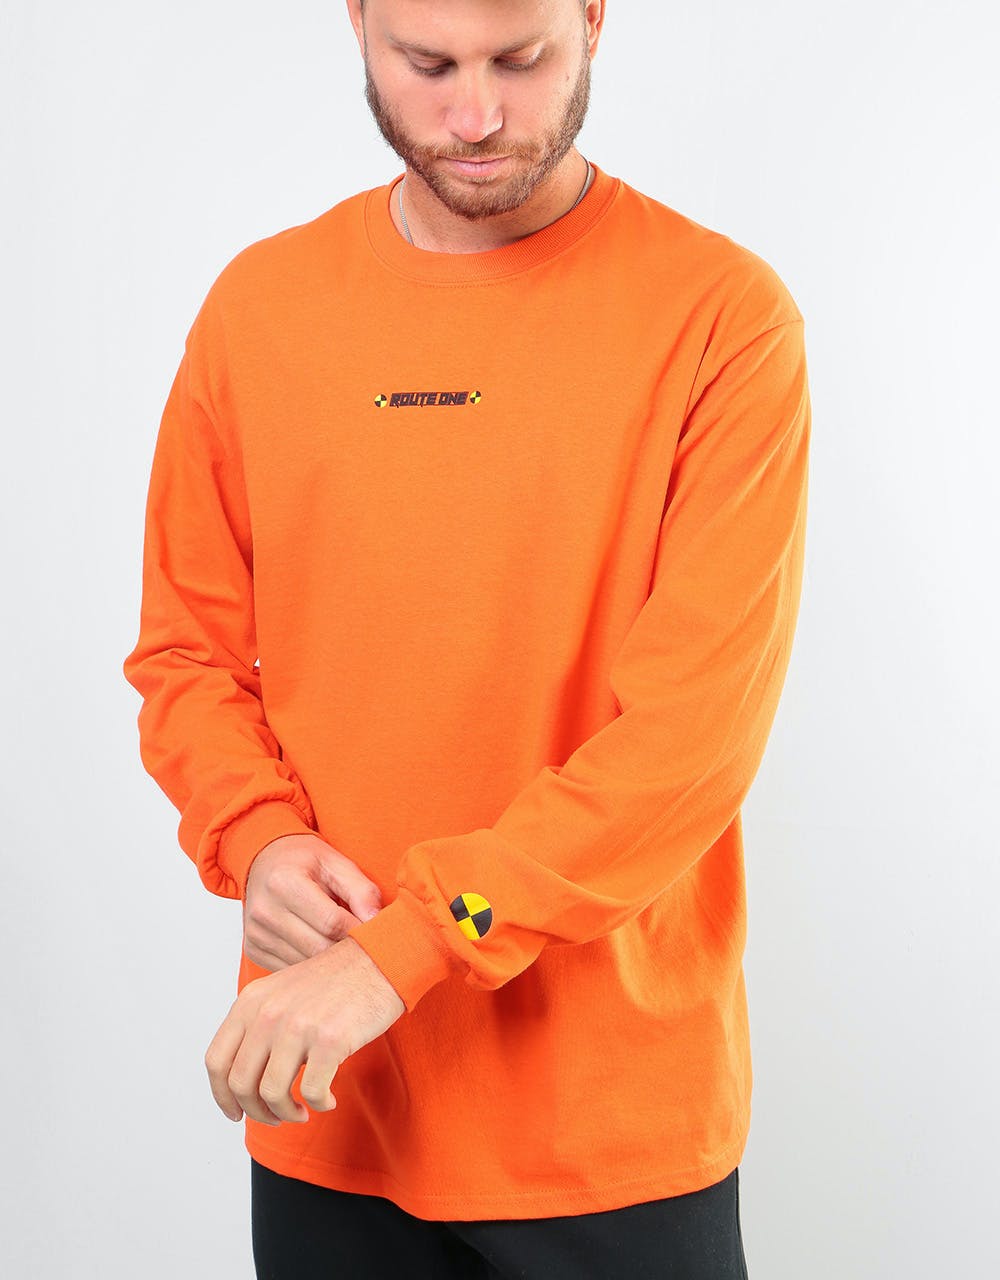 Route One Dummies LS T-Shirt - Sport Orange